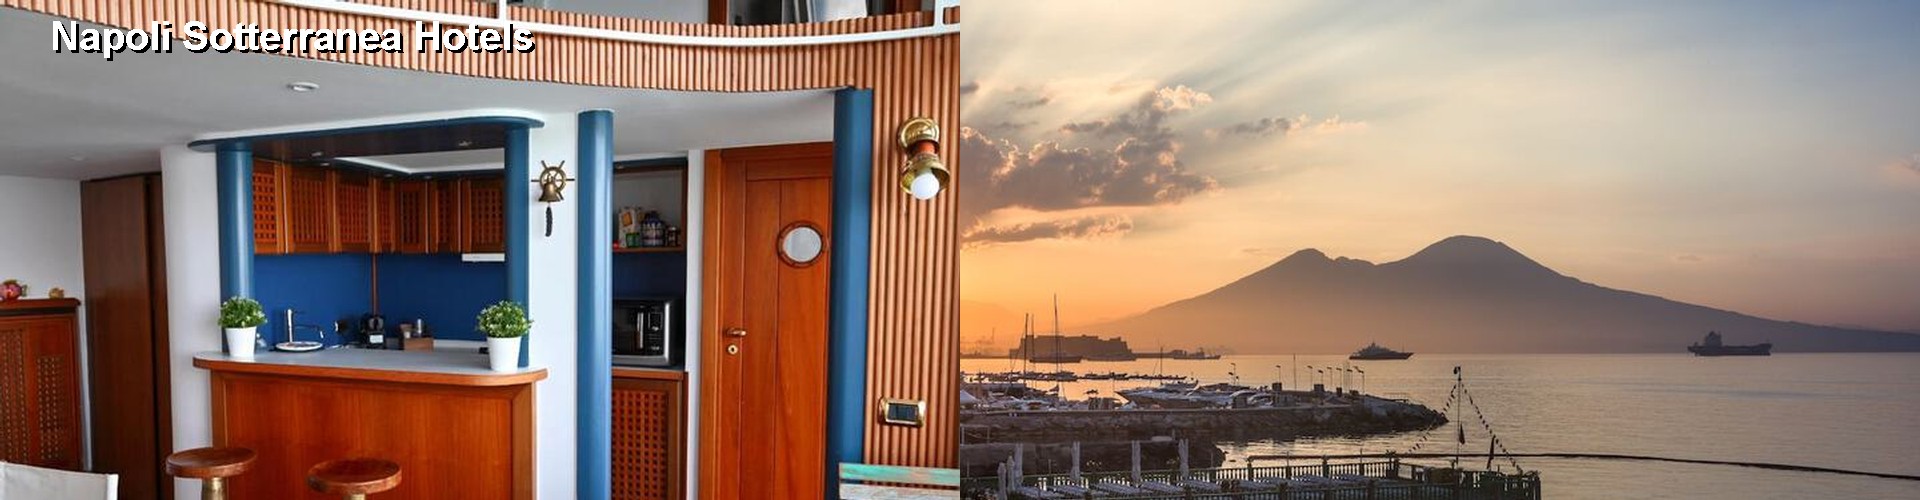 5 Best Hotels near Napoli Sotterranea